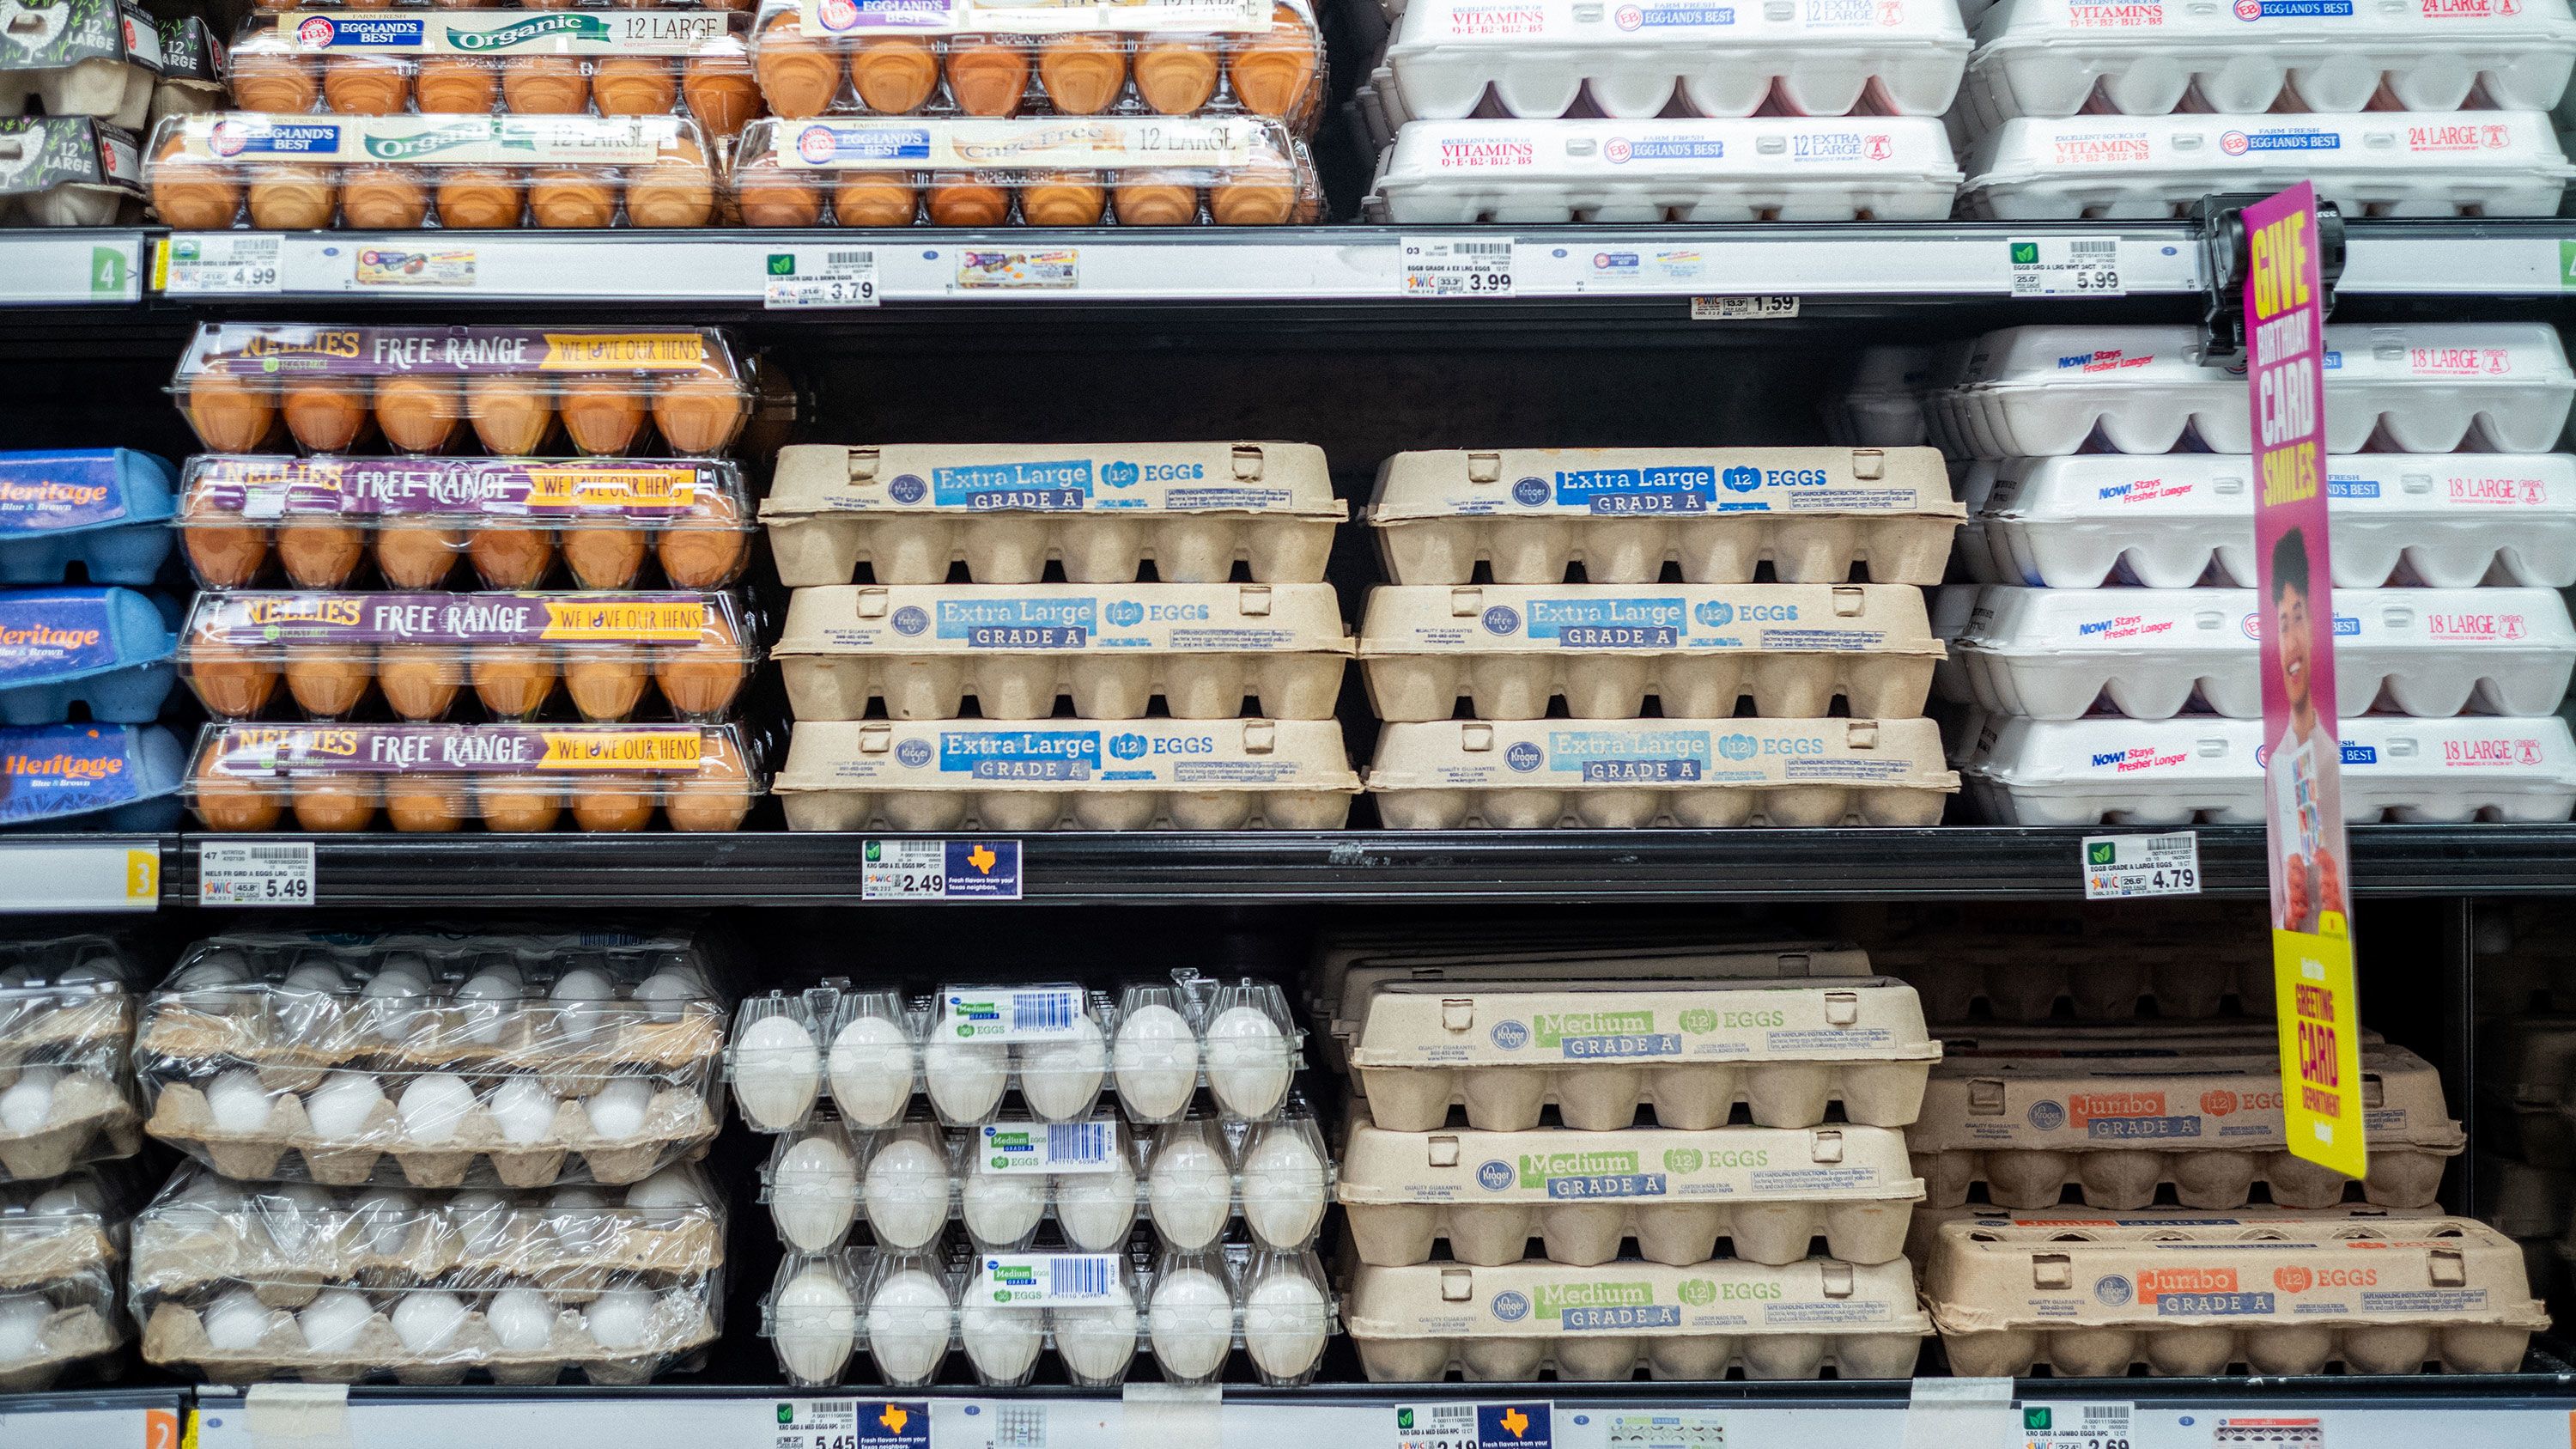 Commercial egg machine entrepreneur cracks market with 60 second egg cooker